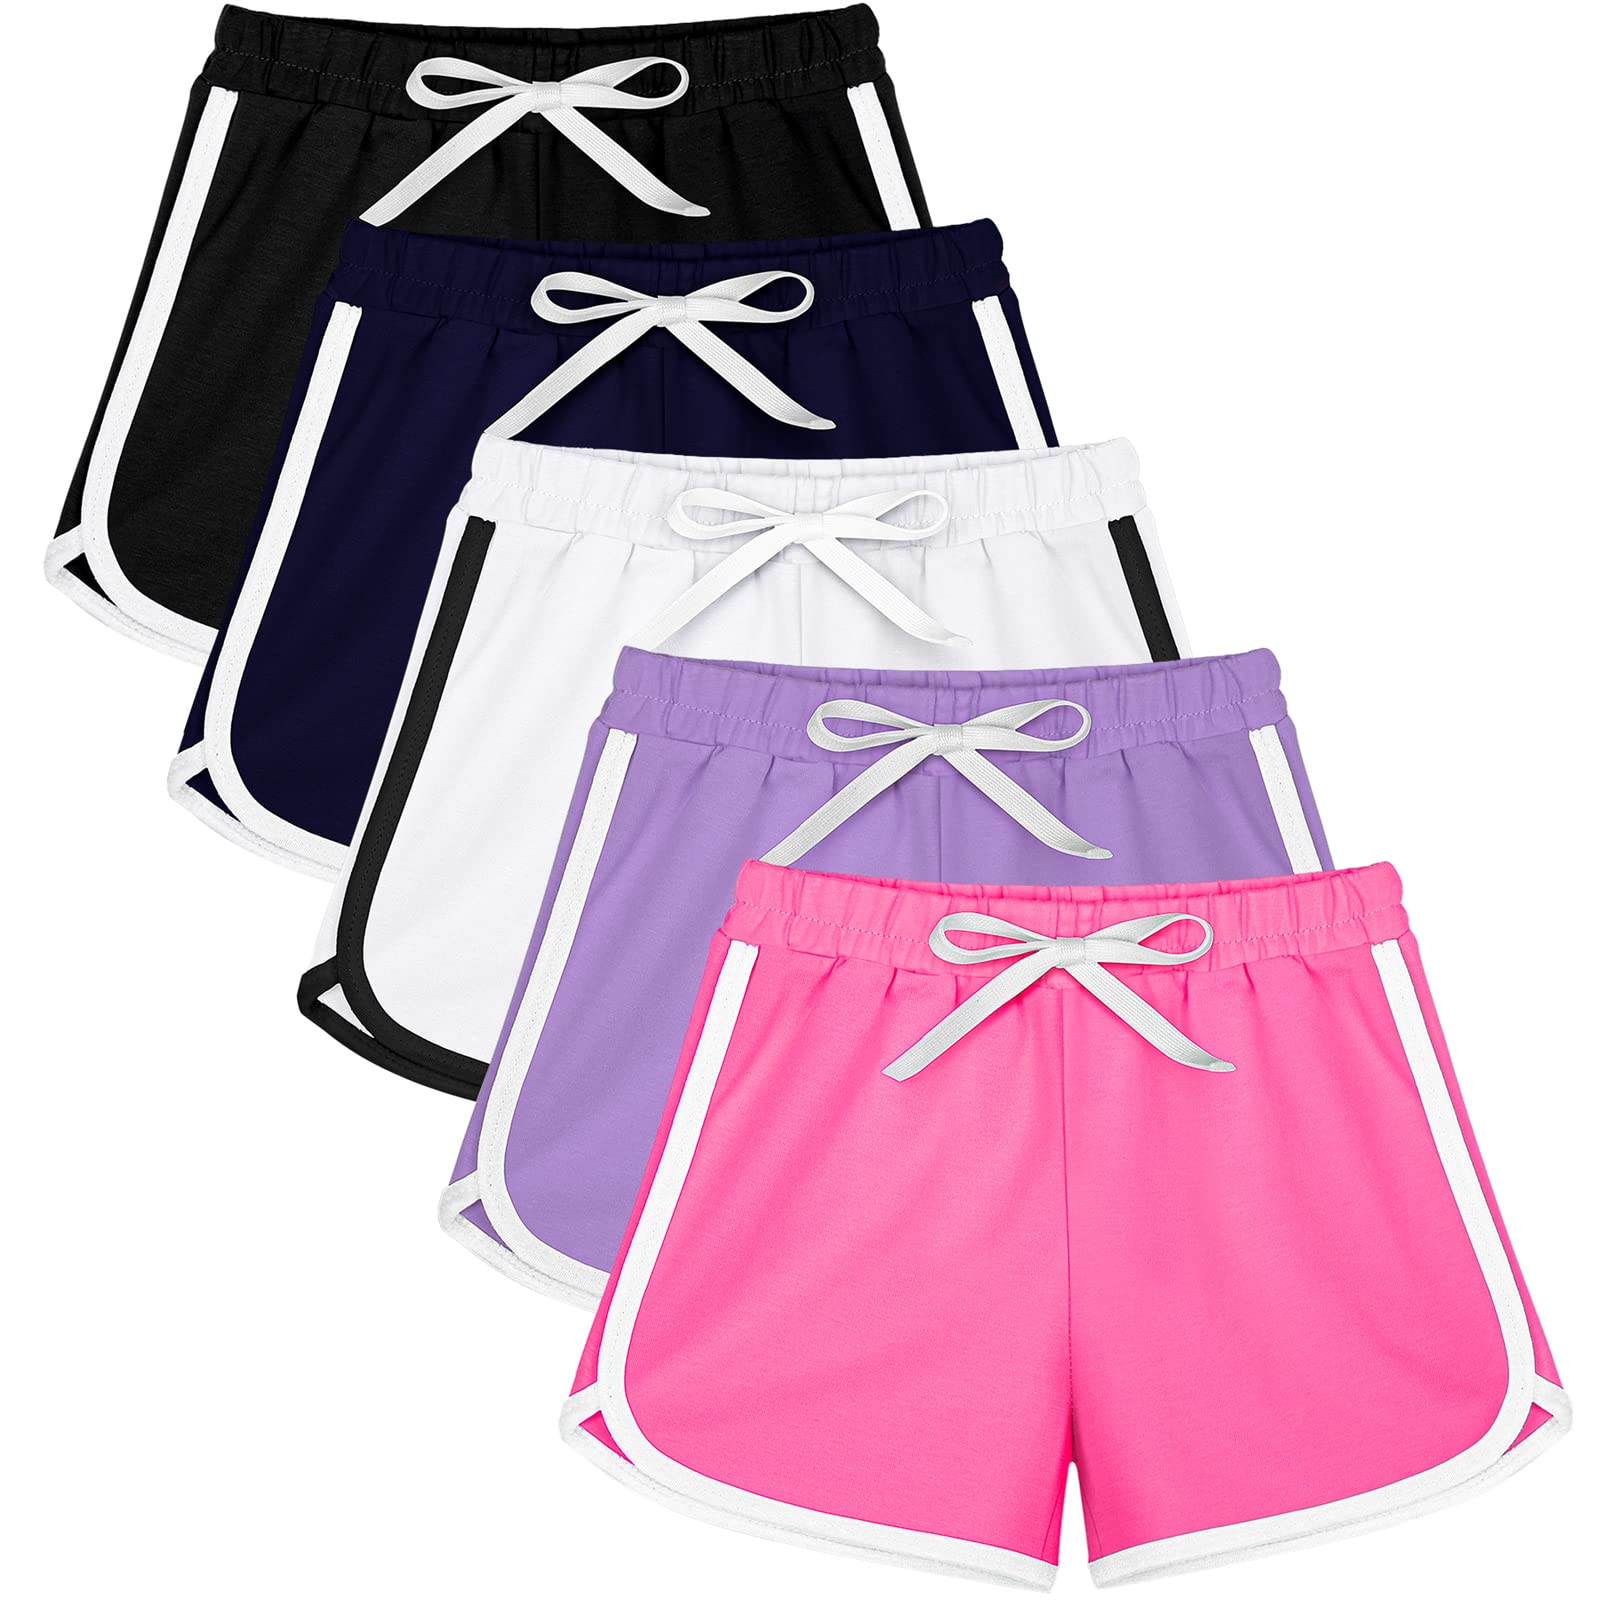 Veeki 2 Pack Cotton Sport Shorts Yoga Dance Short Pants Summer Athletic  Shorts, Black, Hot Pink (xl)